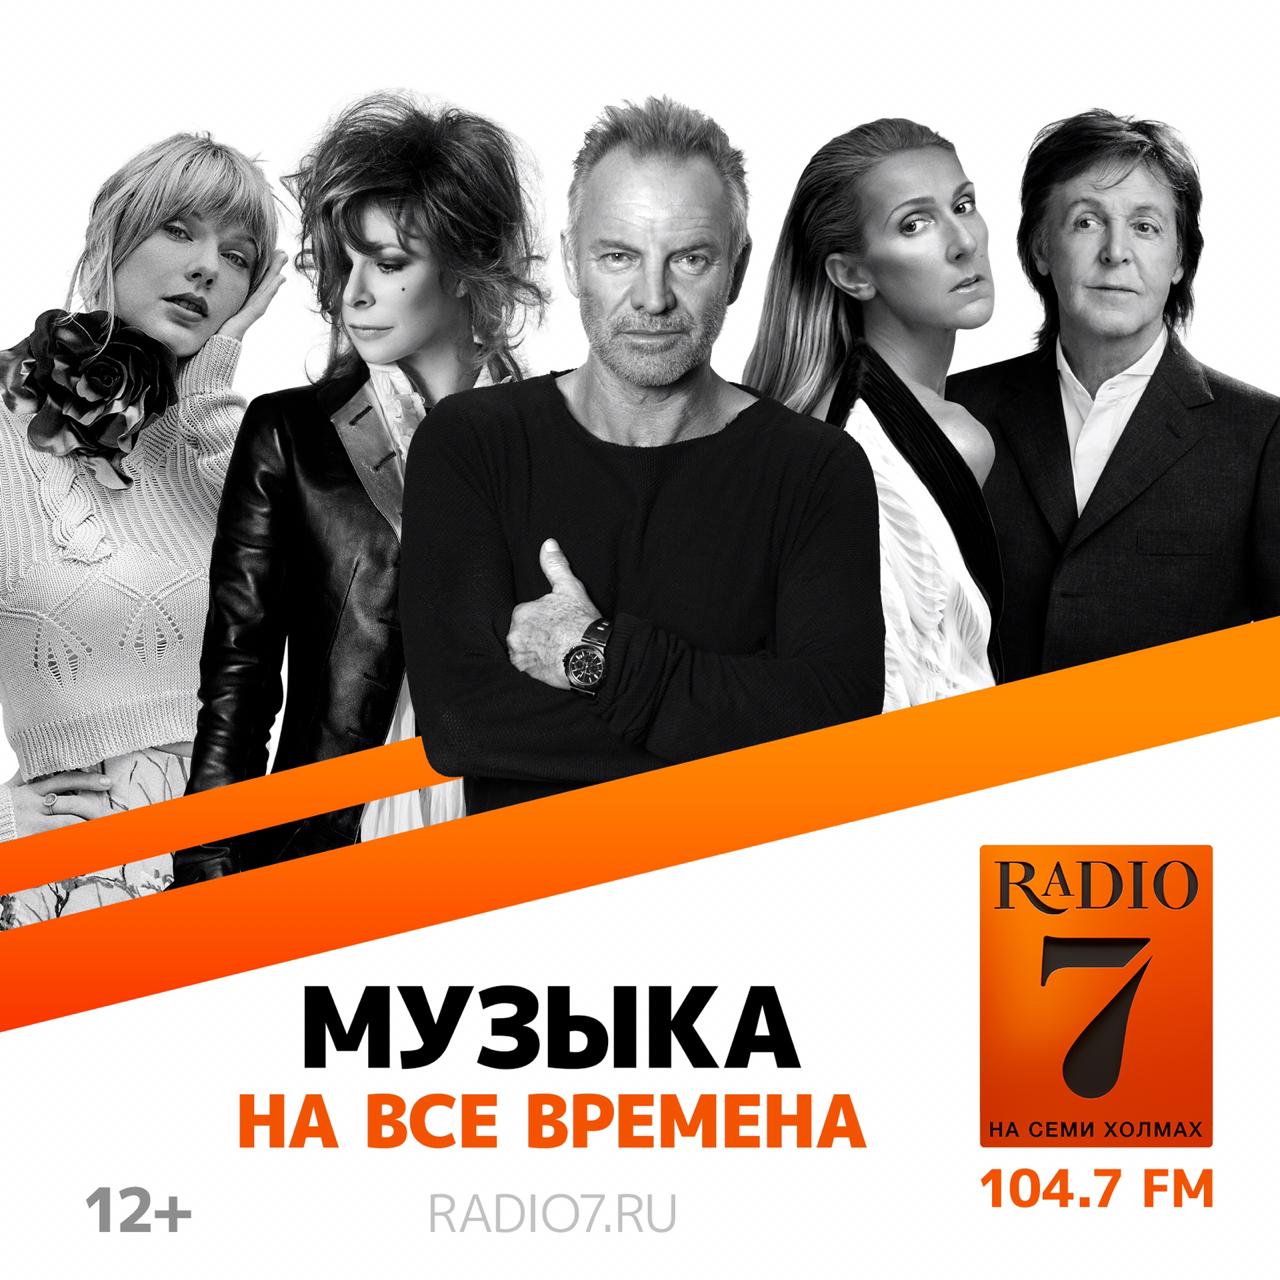 Радио семь сайт. Радио на семи холмах. Радио 7 на 7. Радио 7 на семи холмах Москва. Радио 7 реклама.